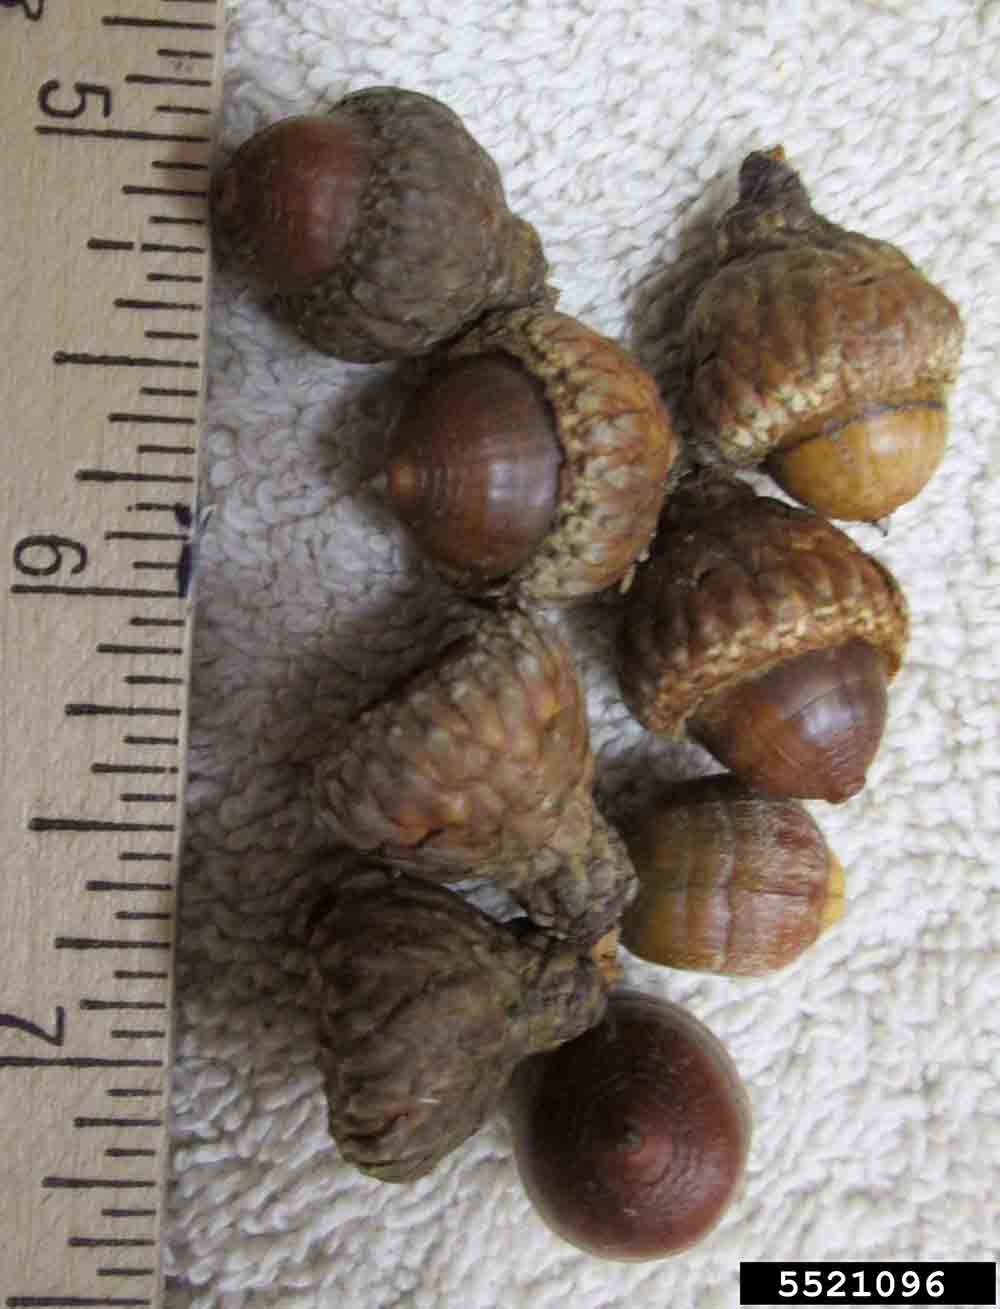 Scarlet oak acorns